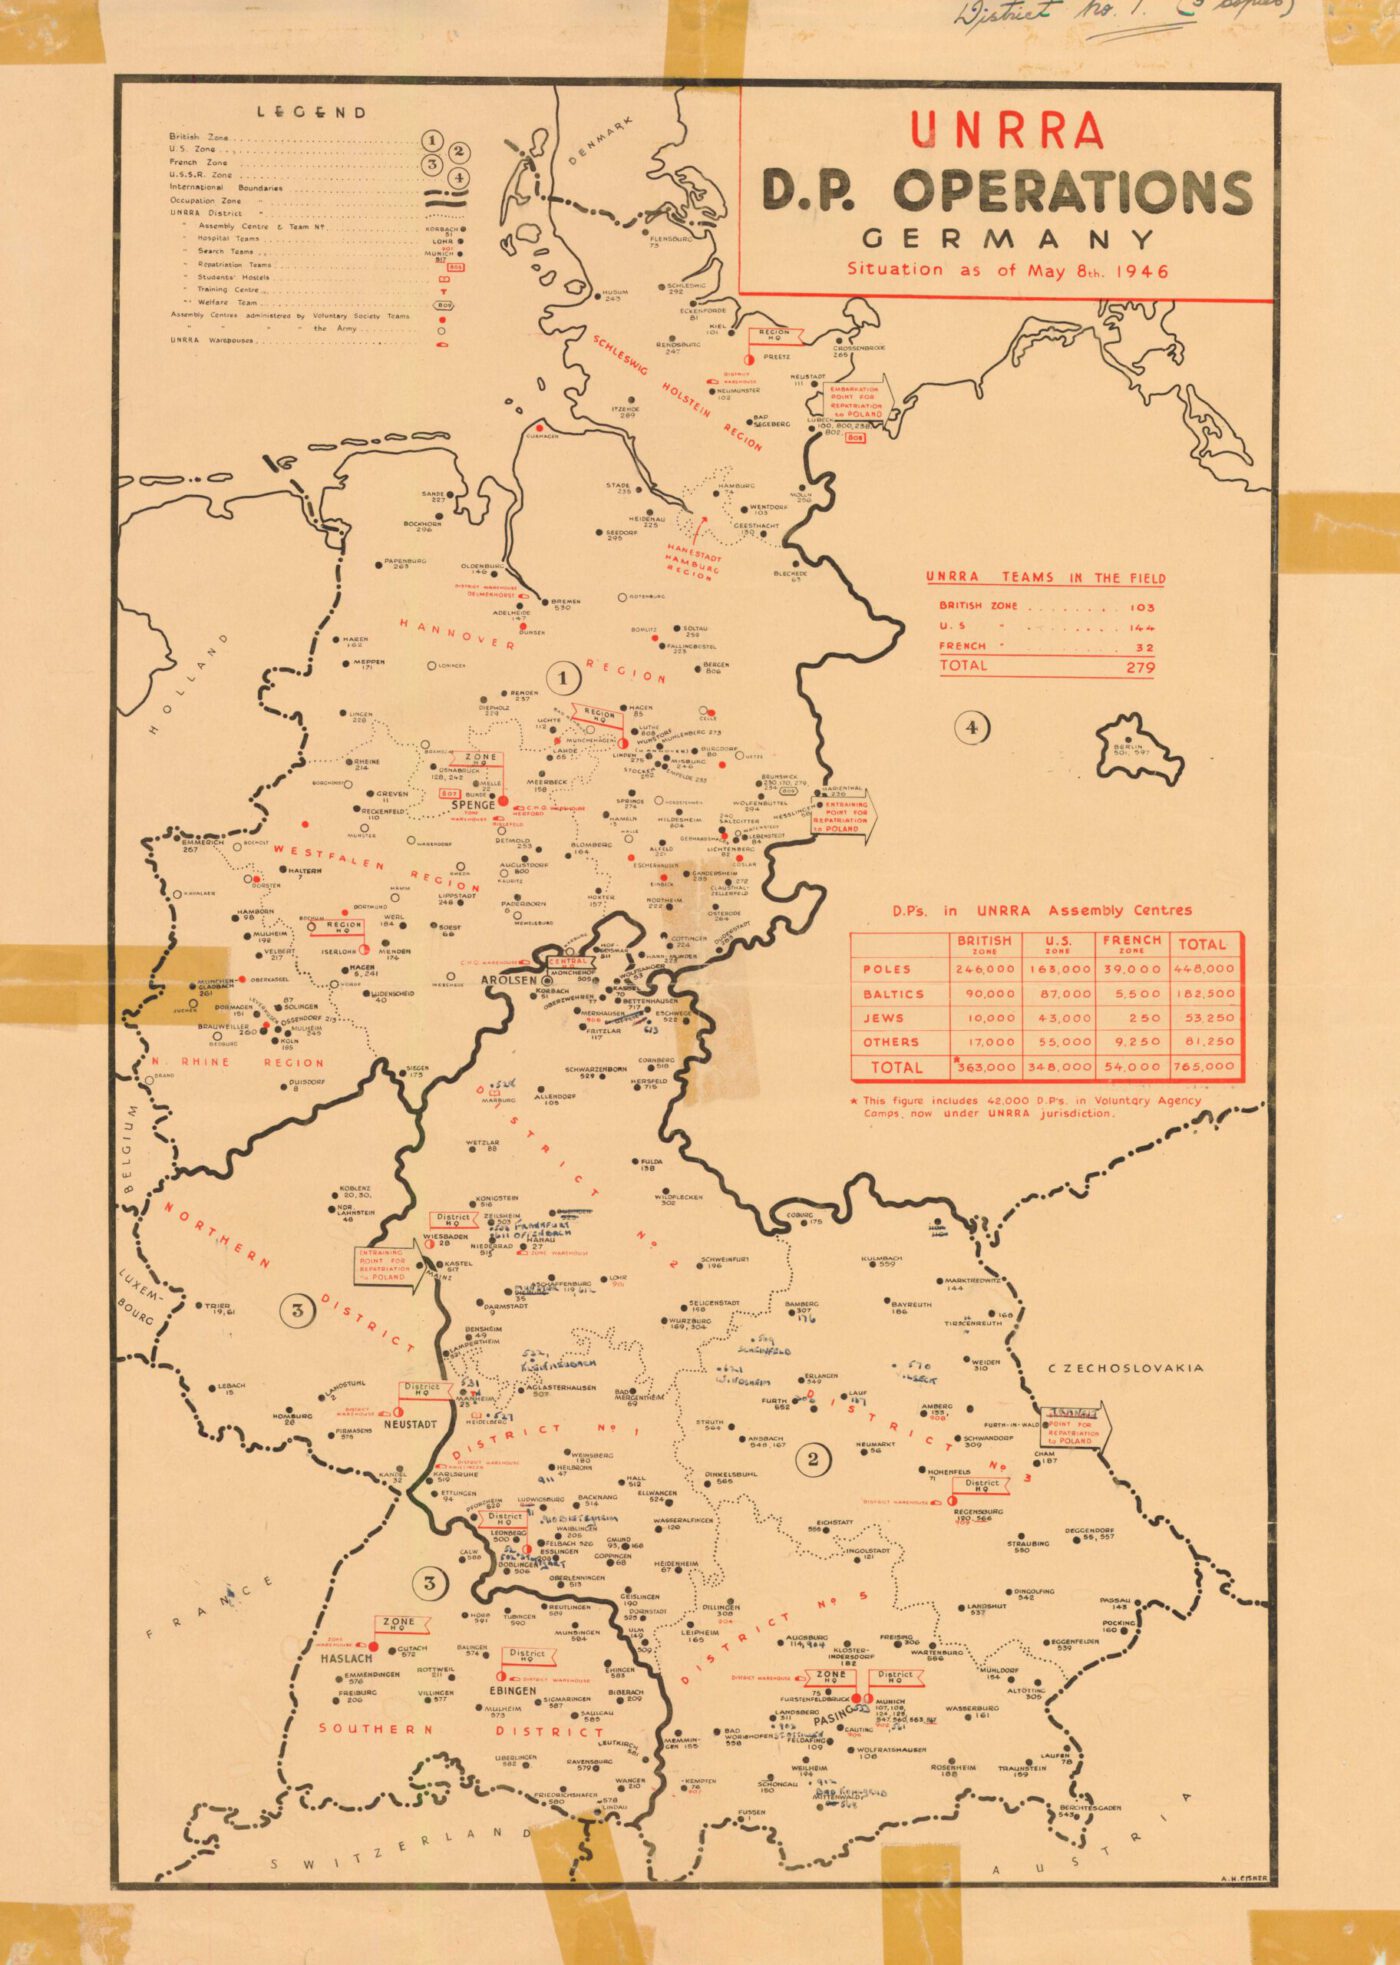 Karte der UNRRA D.P. Operations Germany, 8. Mai 1946. 6.2.2 / 129799278 ITS Digital Archive, Arolsen Archive